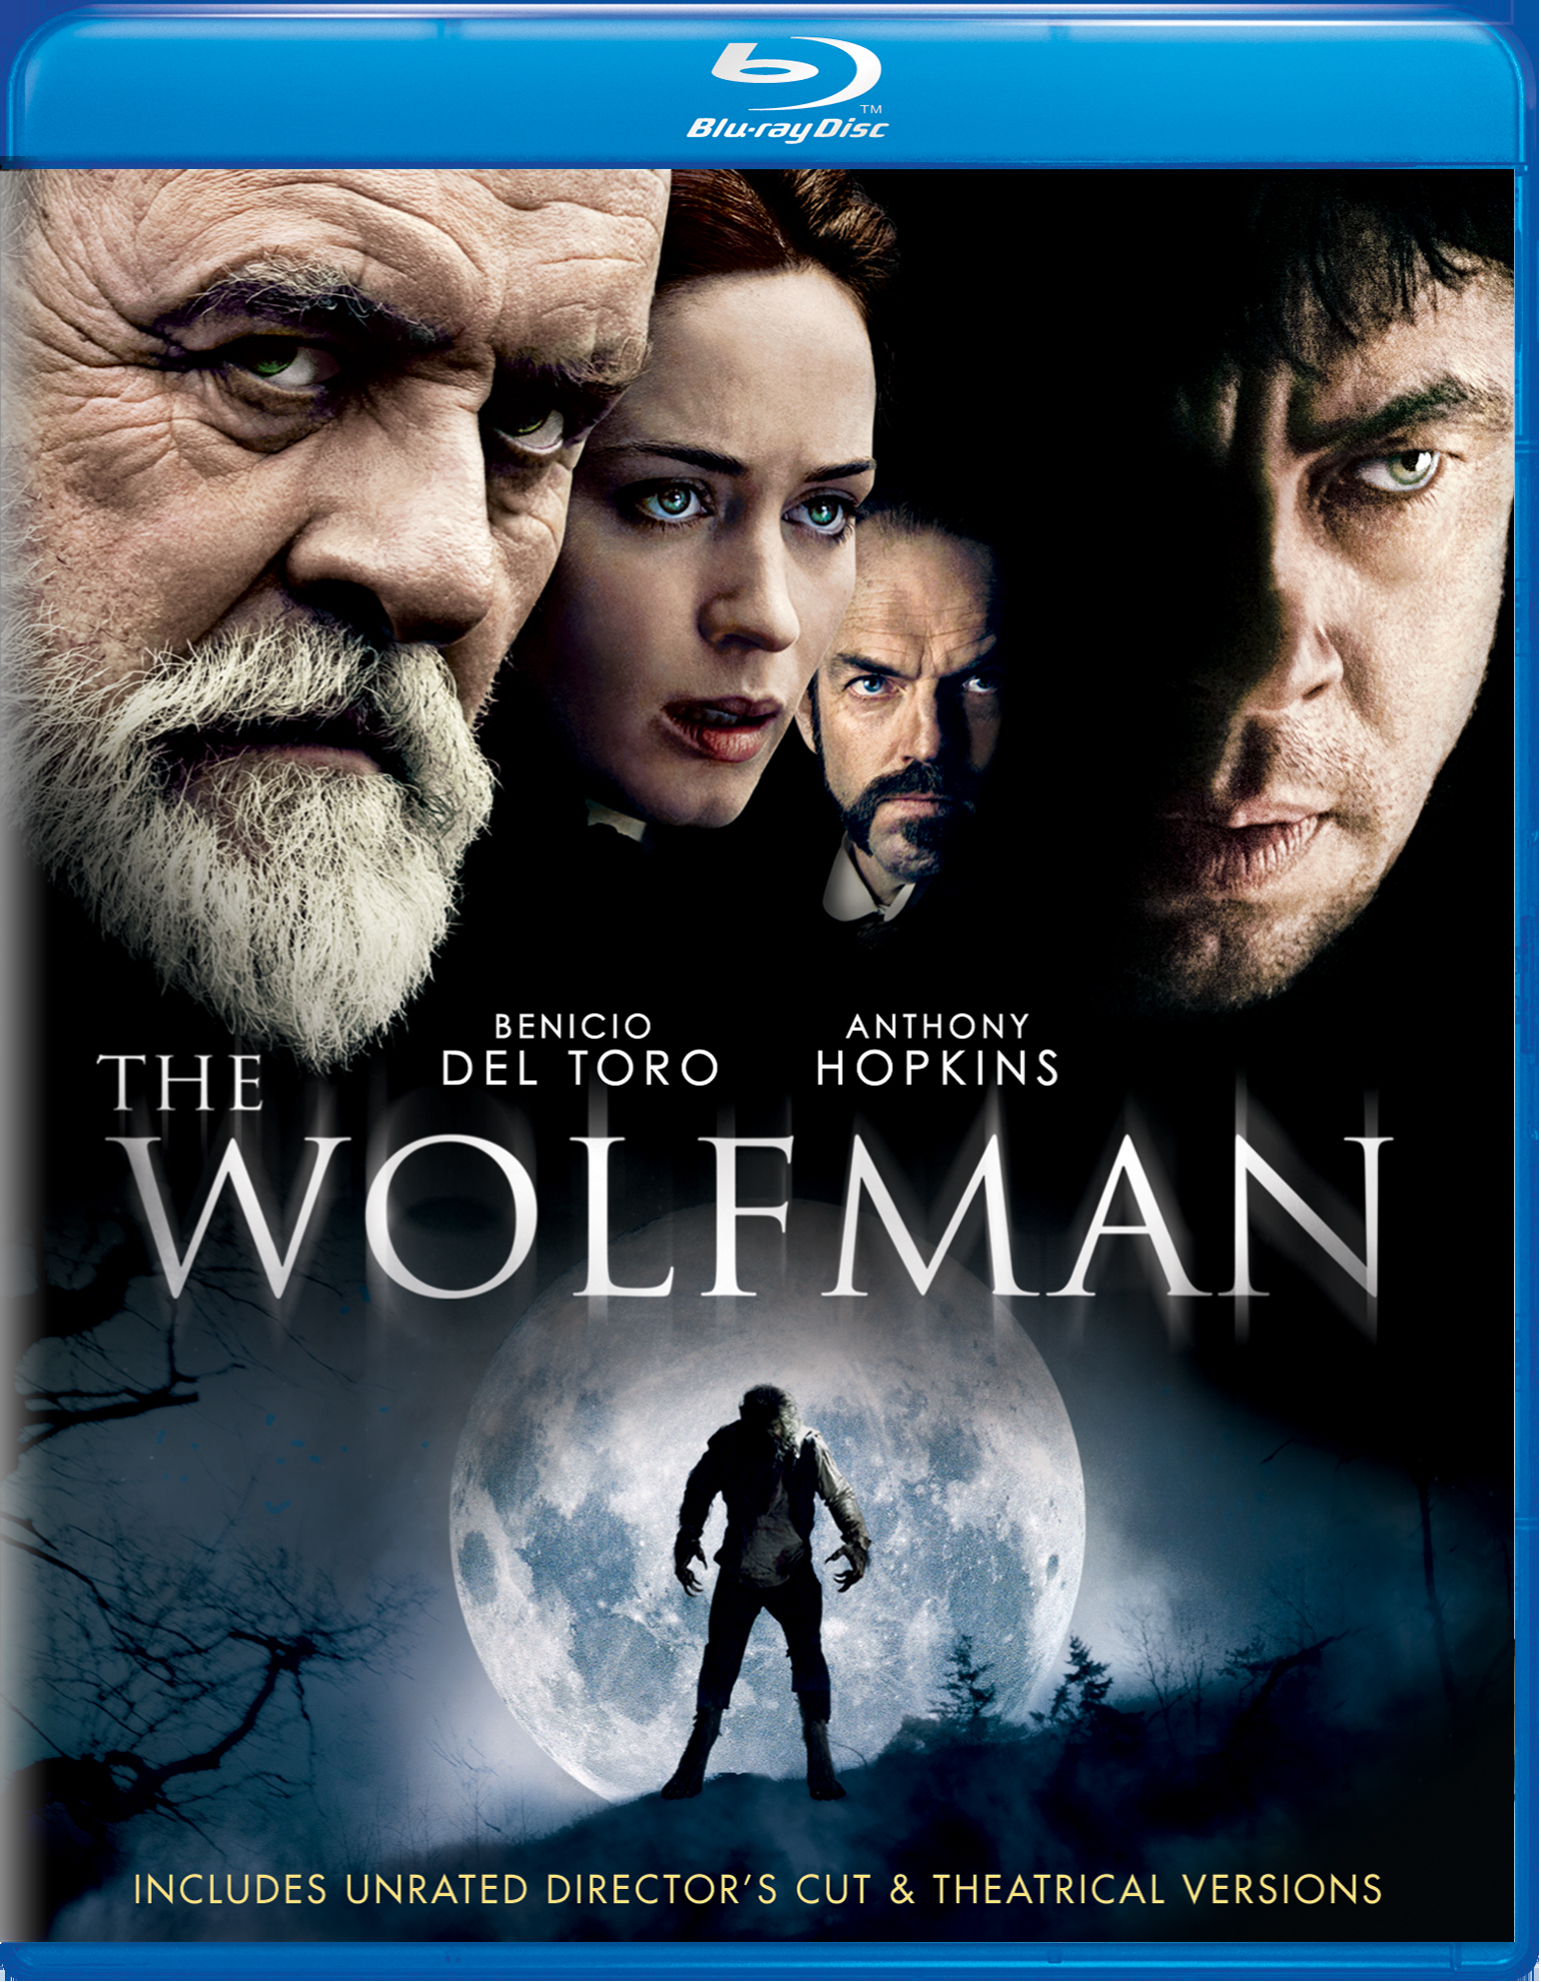 The Wolfman (2010) - Blu-ray [ 2010 ]  - Horror Movies On Blu-ray - Movies On GRUV